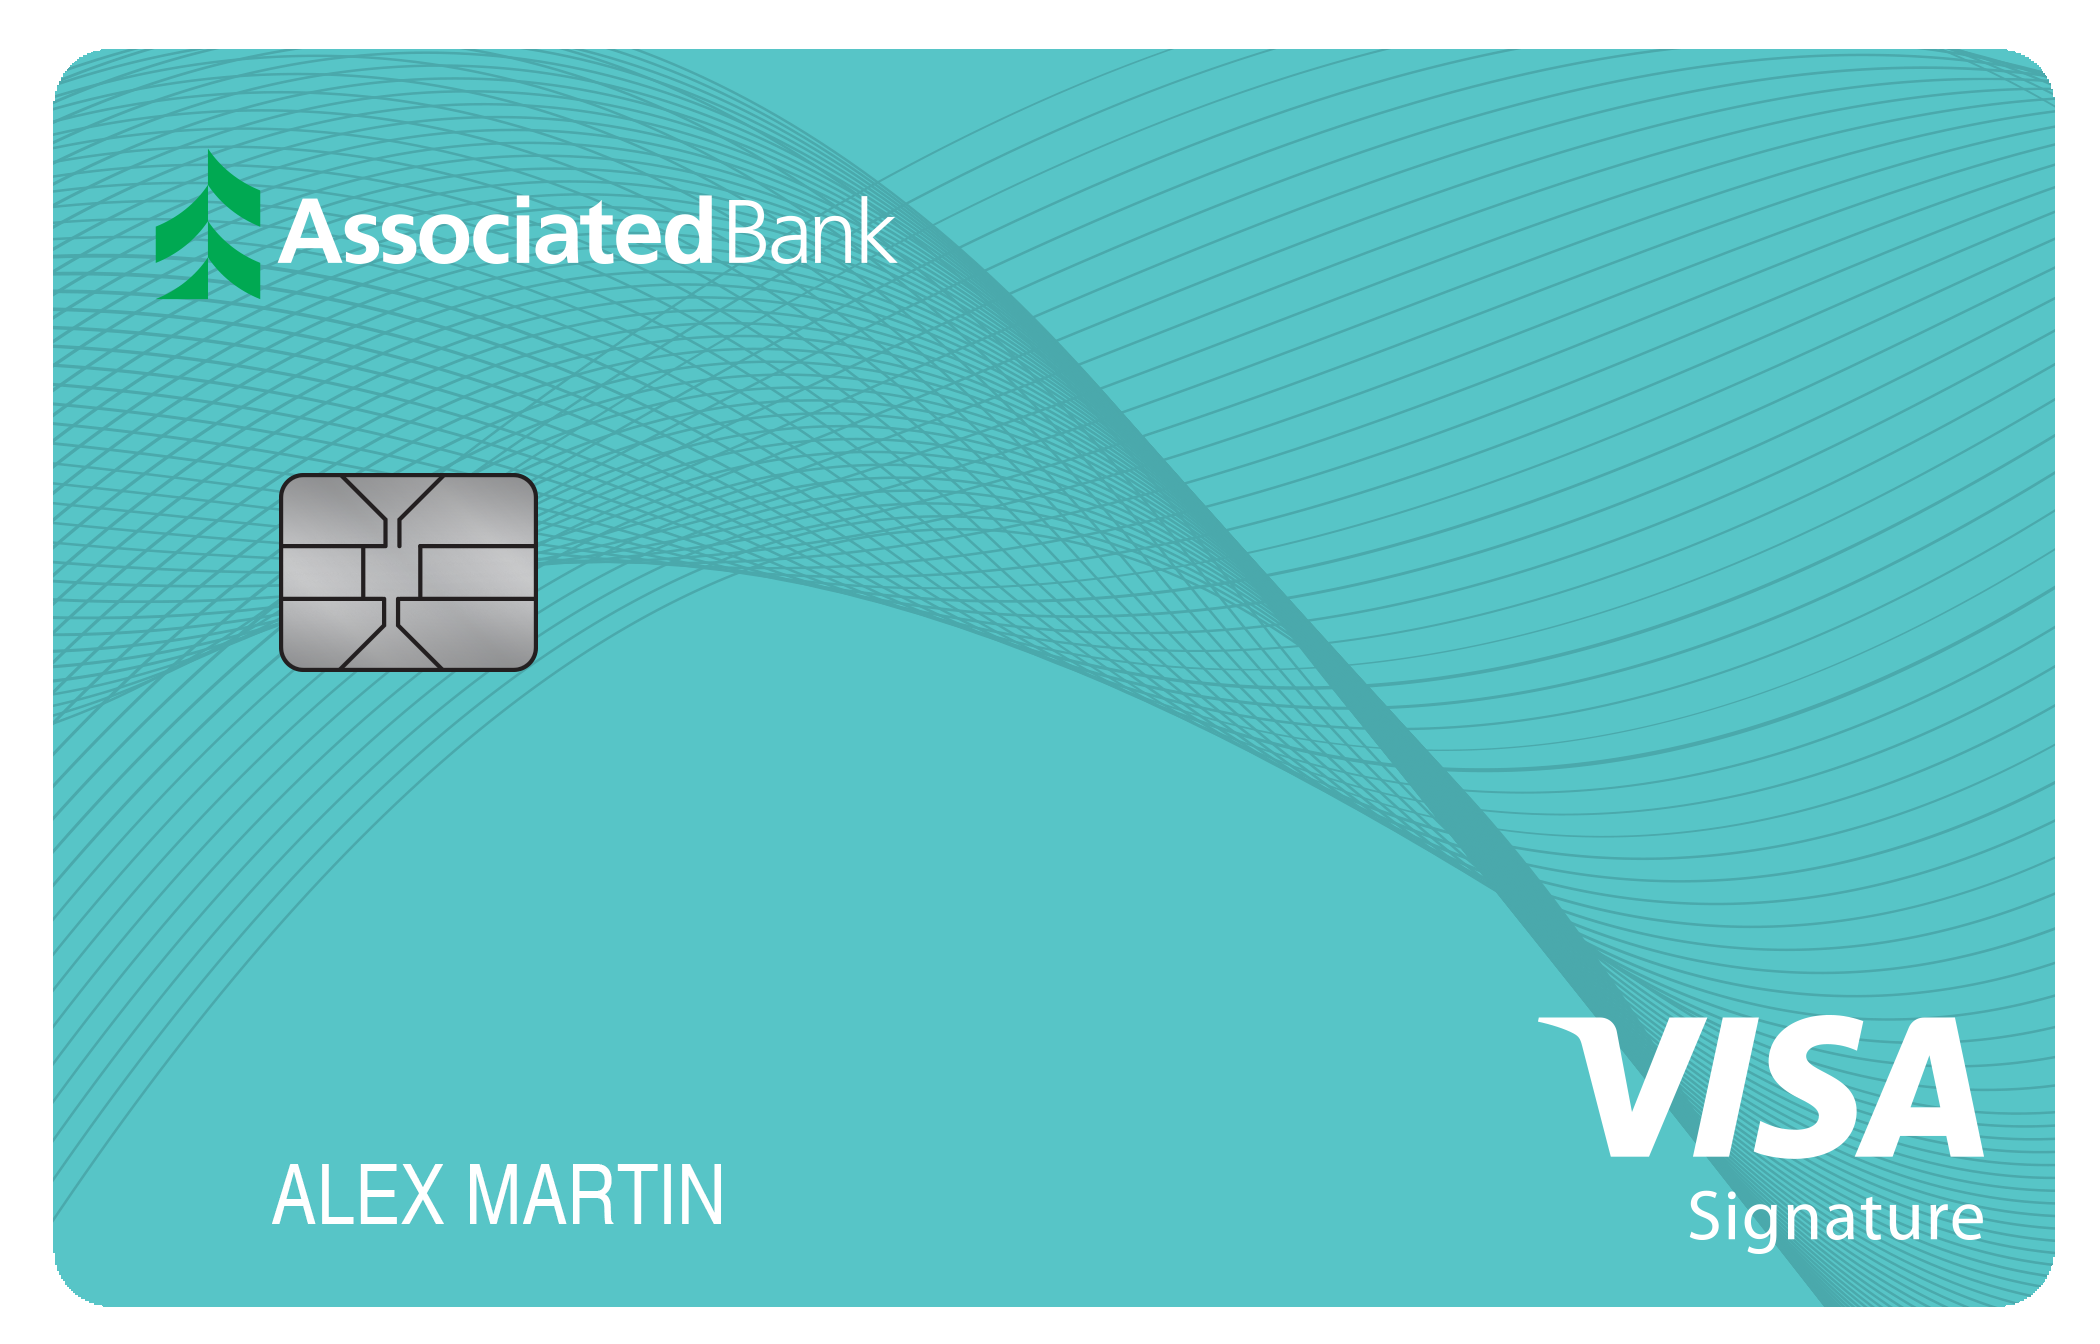 Associated Bank Max Cash Preferred Card